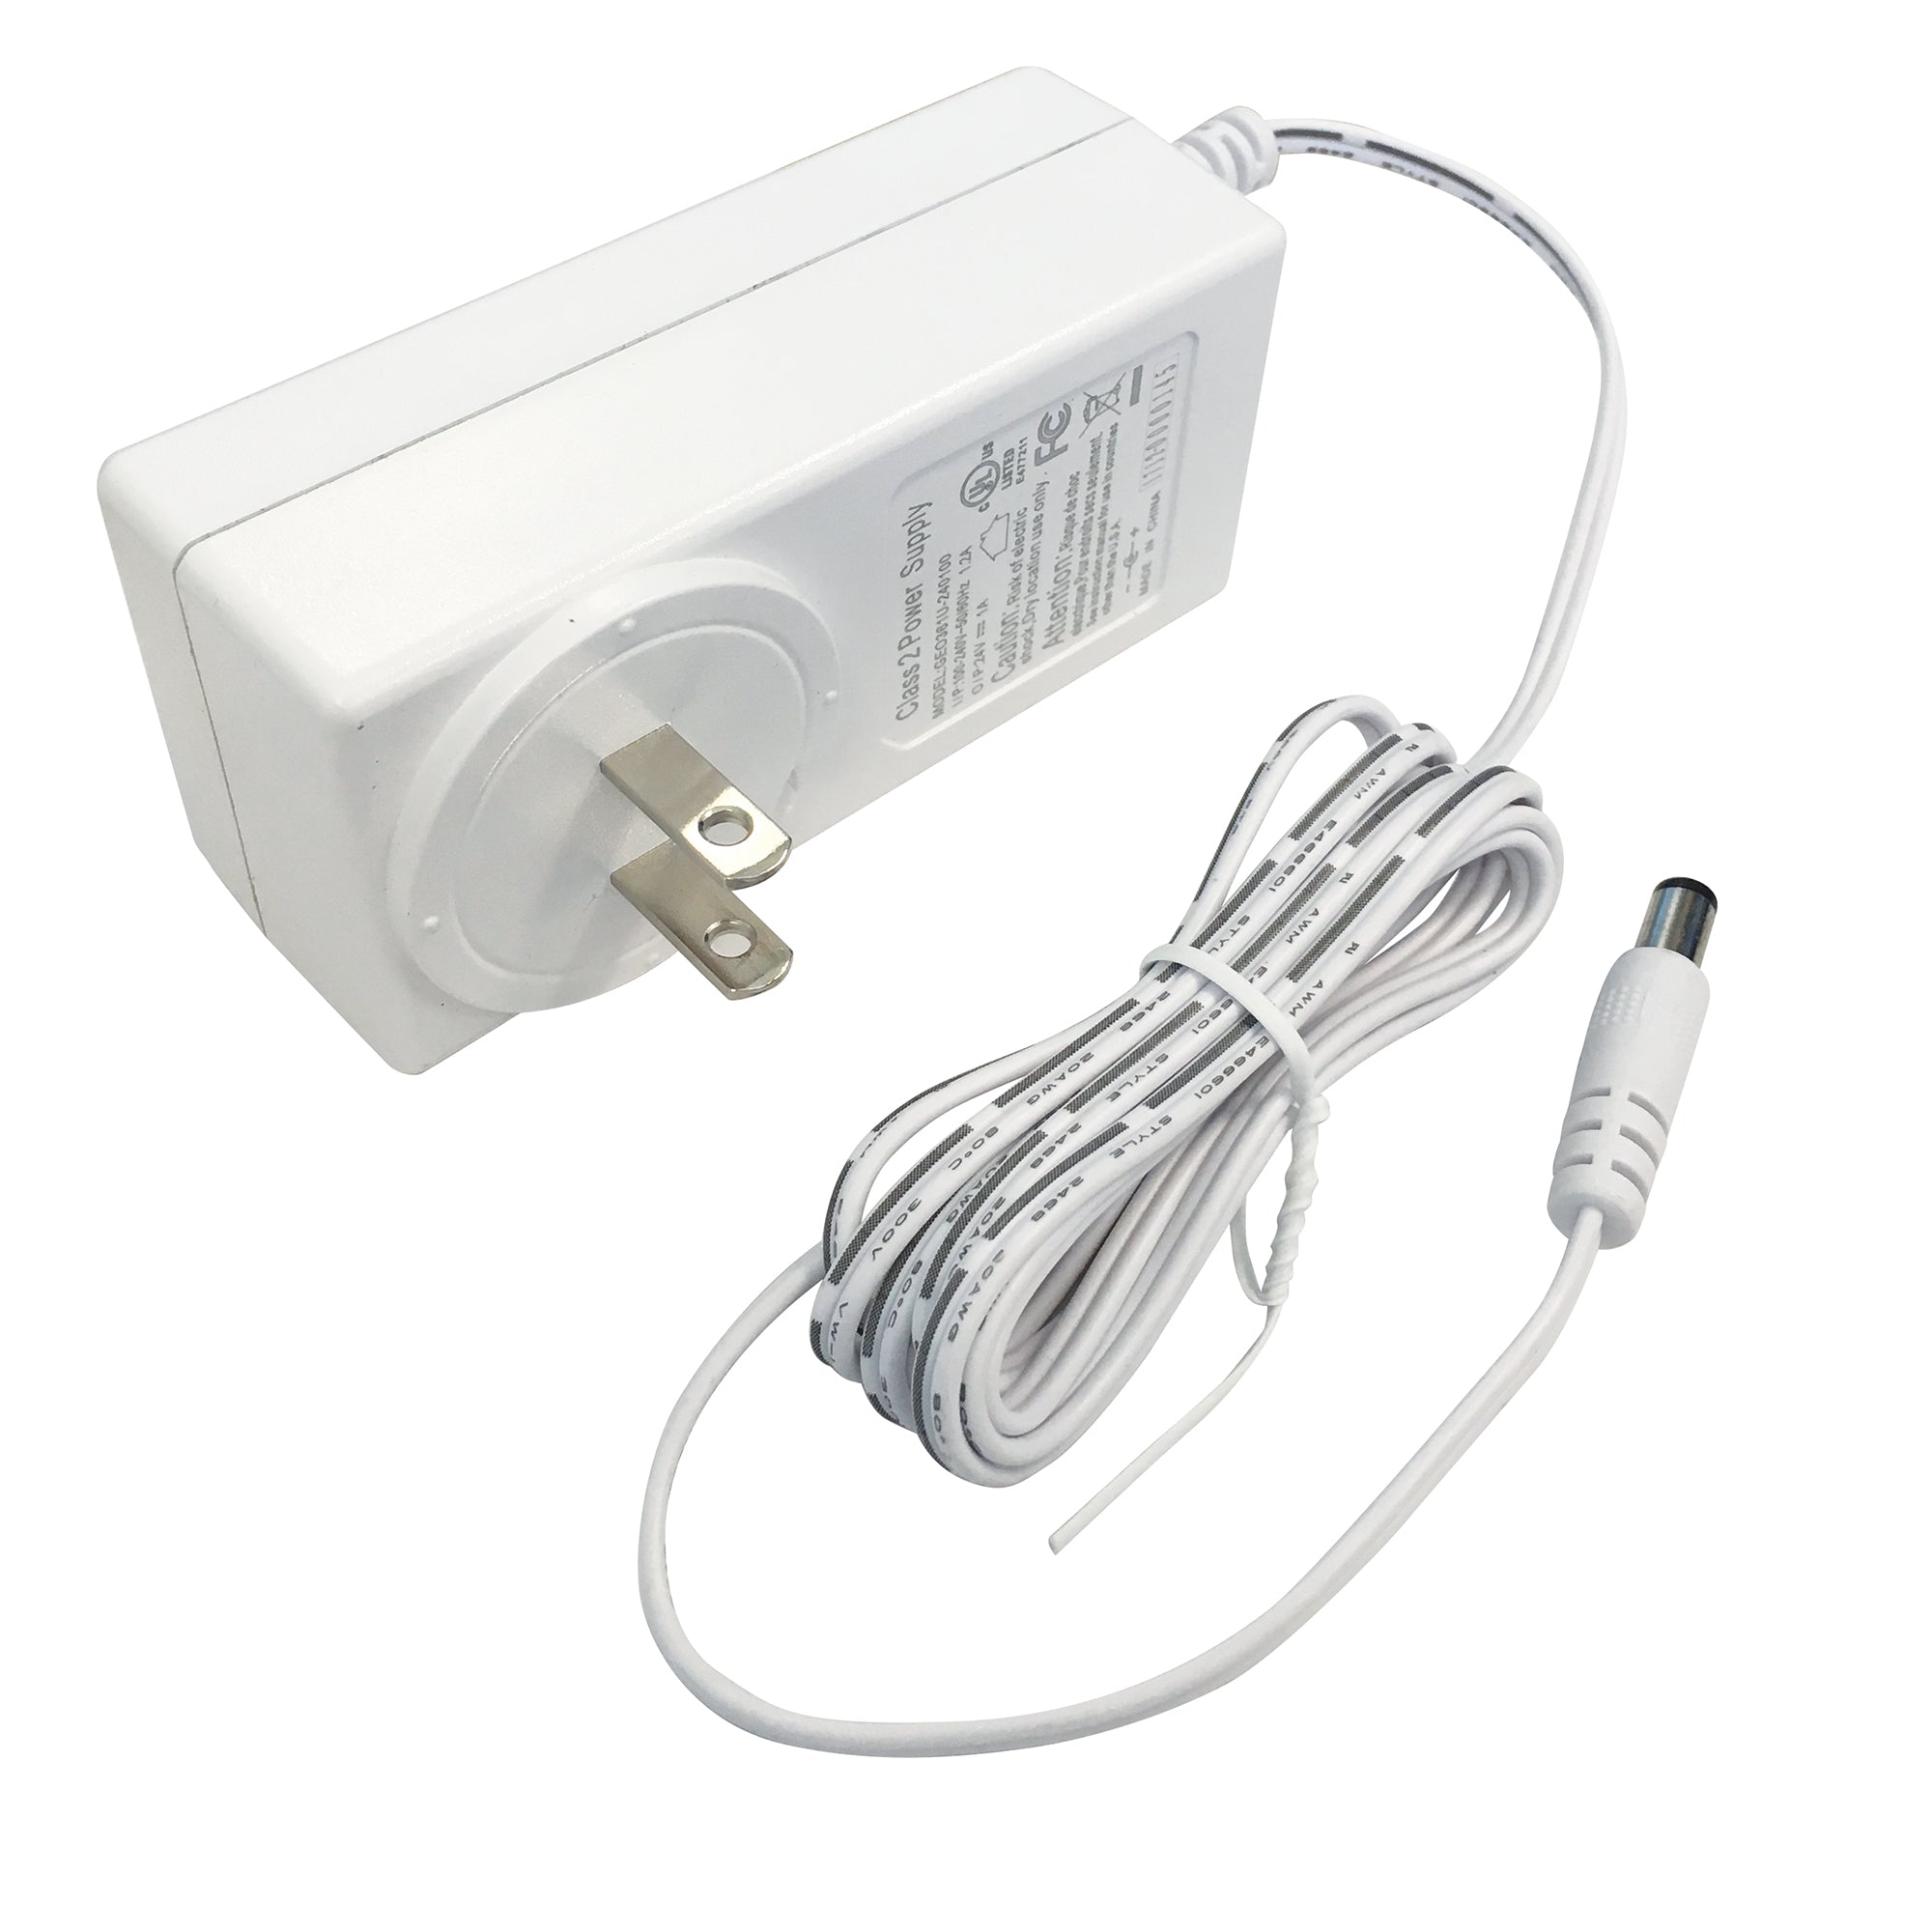 Nora Lighting NATL-545W 24V 45W Direct Plug-in Driver - White